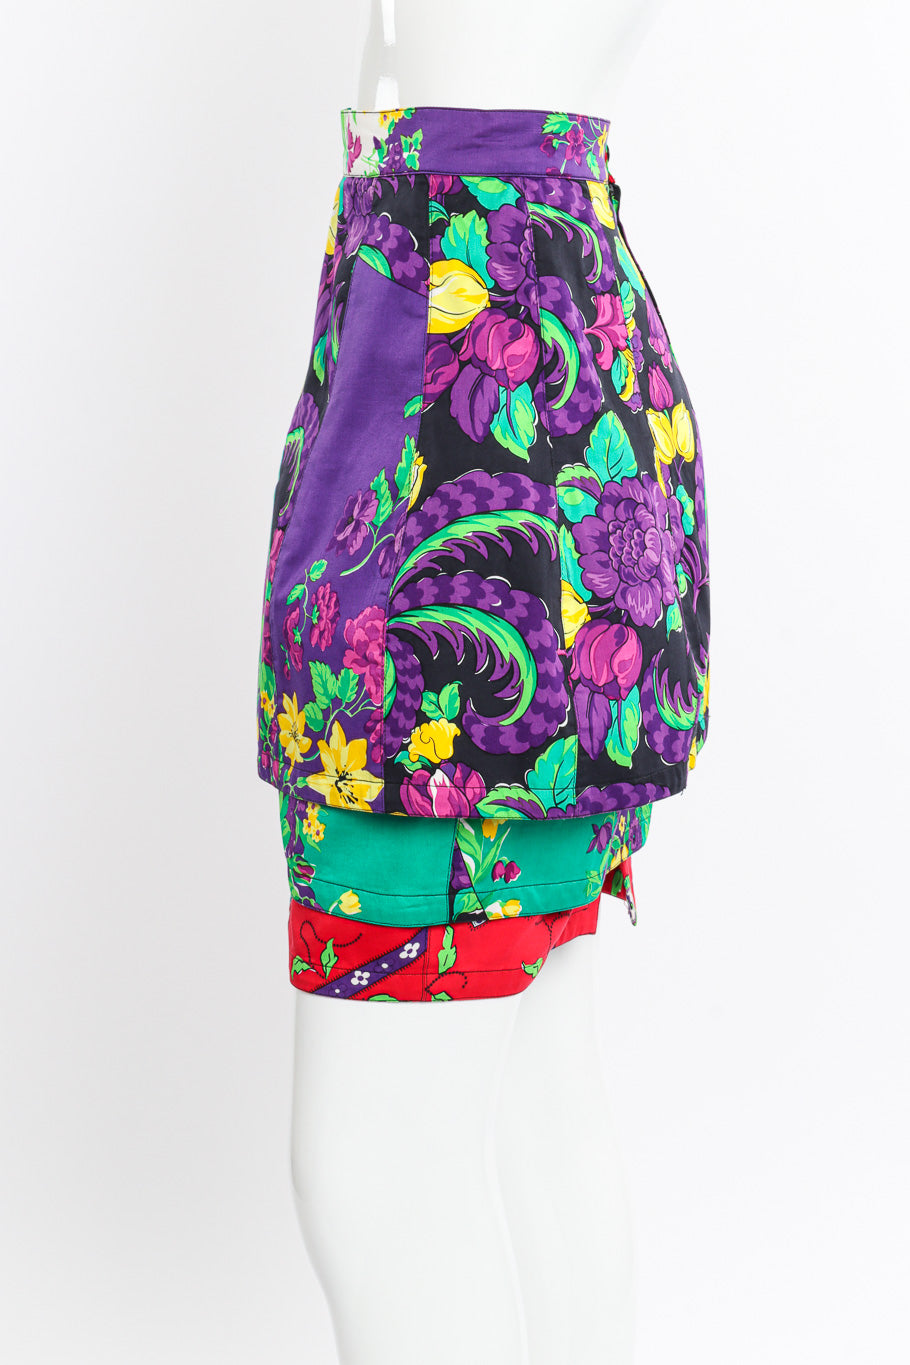 Vintage Gianni Versace Floral Cotton Tier Skirt side view on mannequin @Recessla